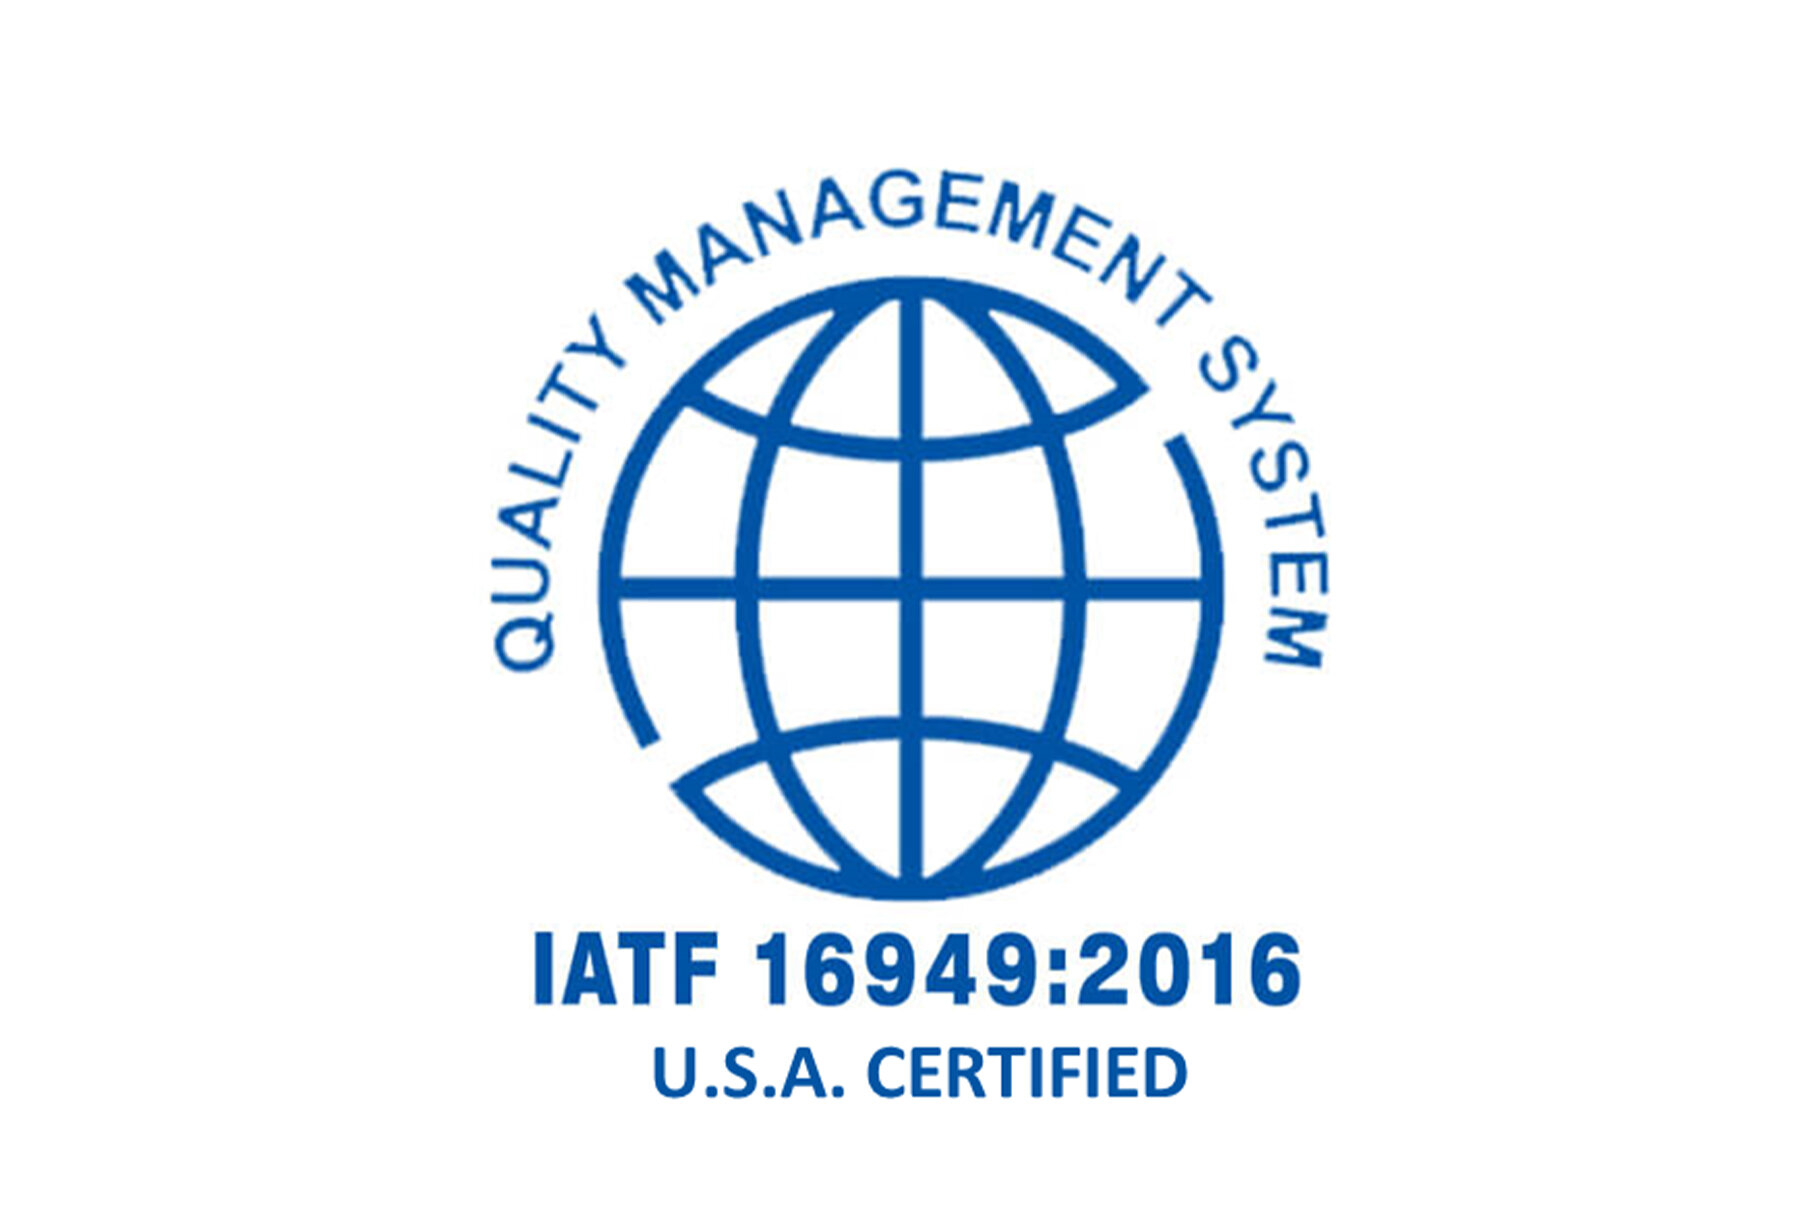 IATF Certified.jpg